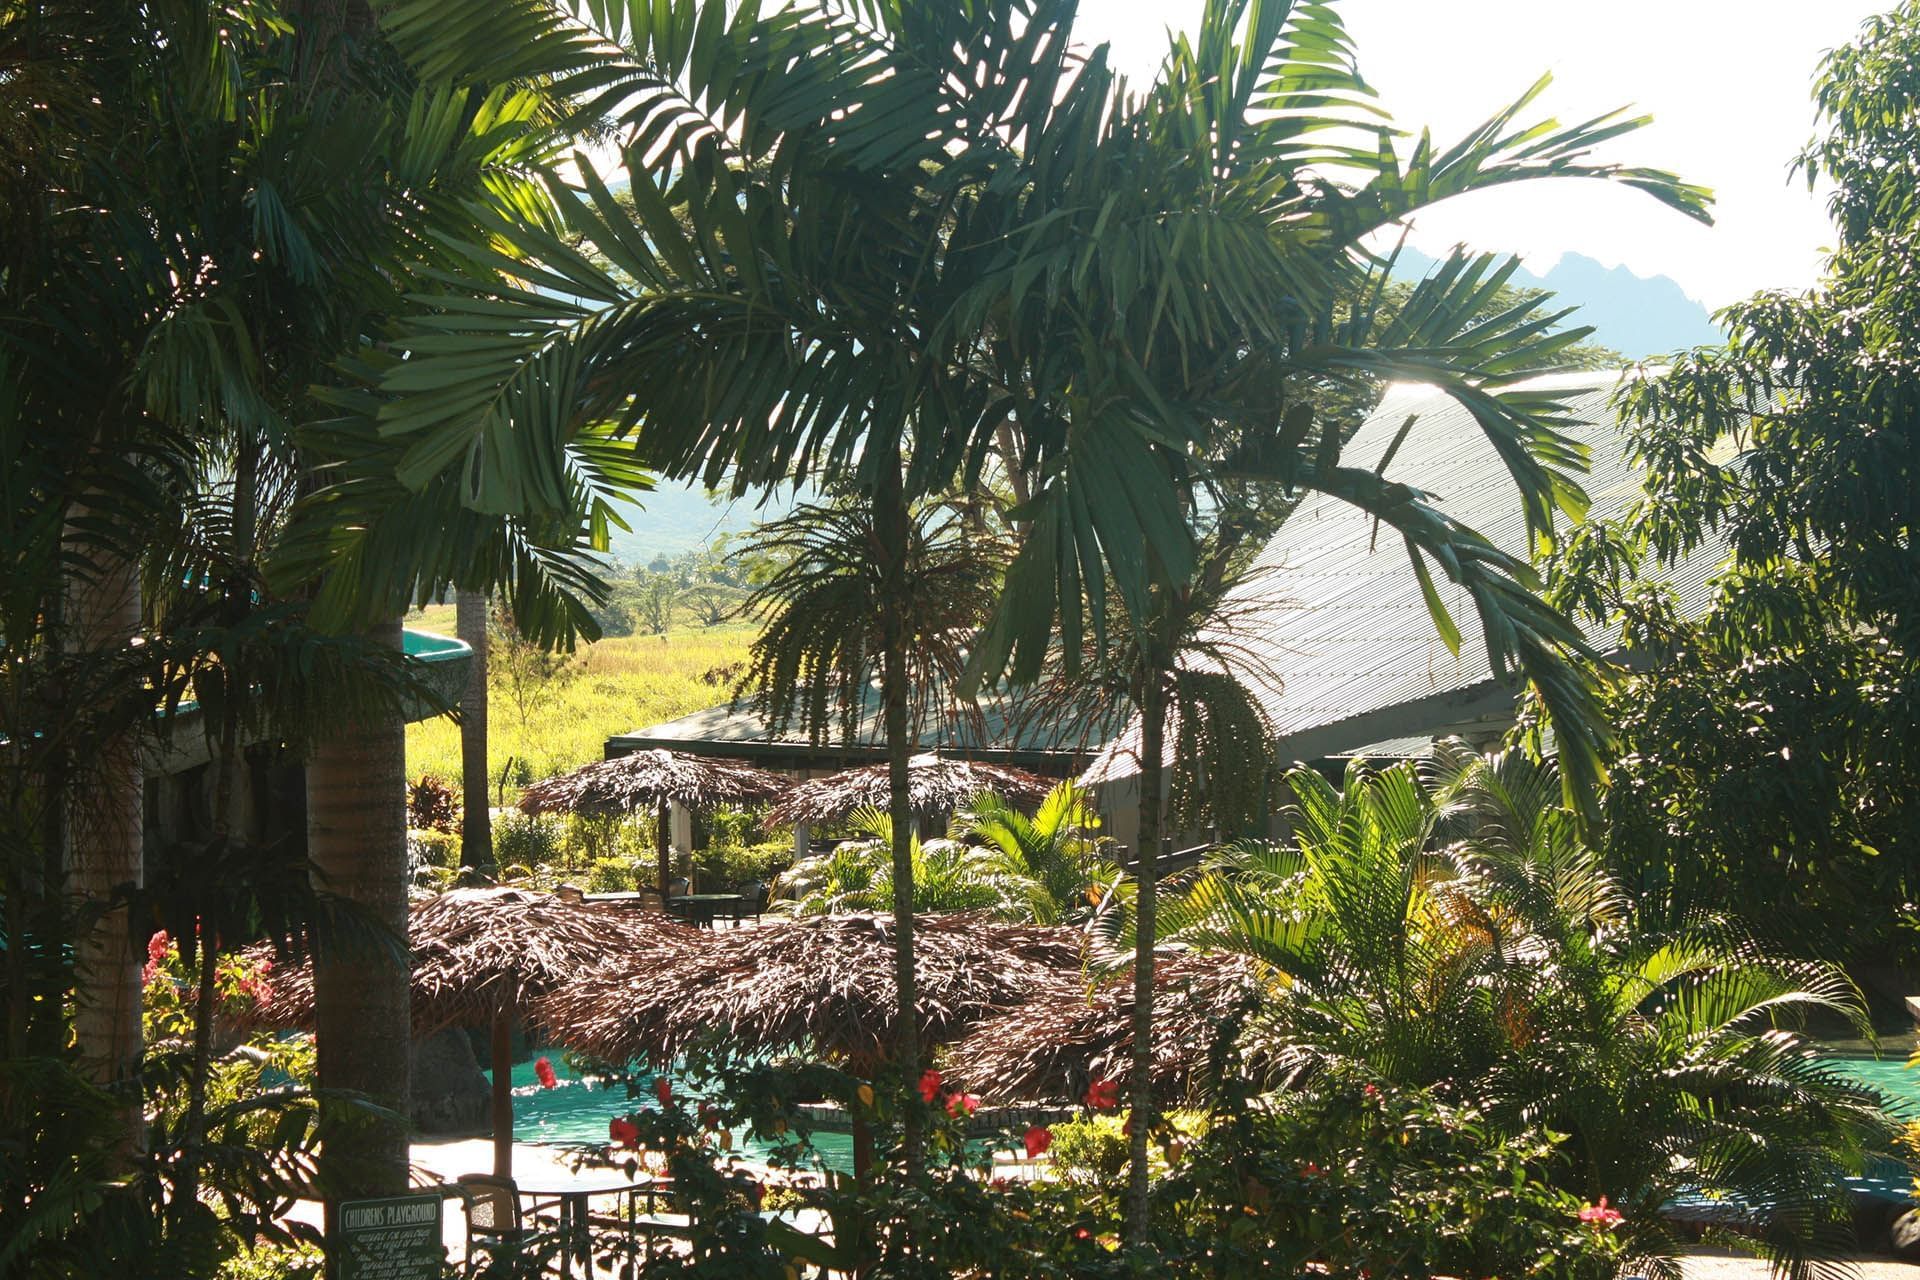 Garden with the pool & palm trees at Tokatoka Resort